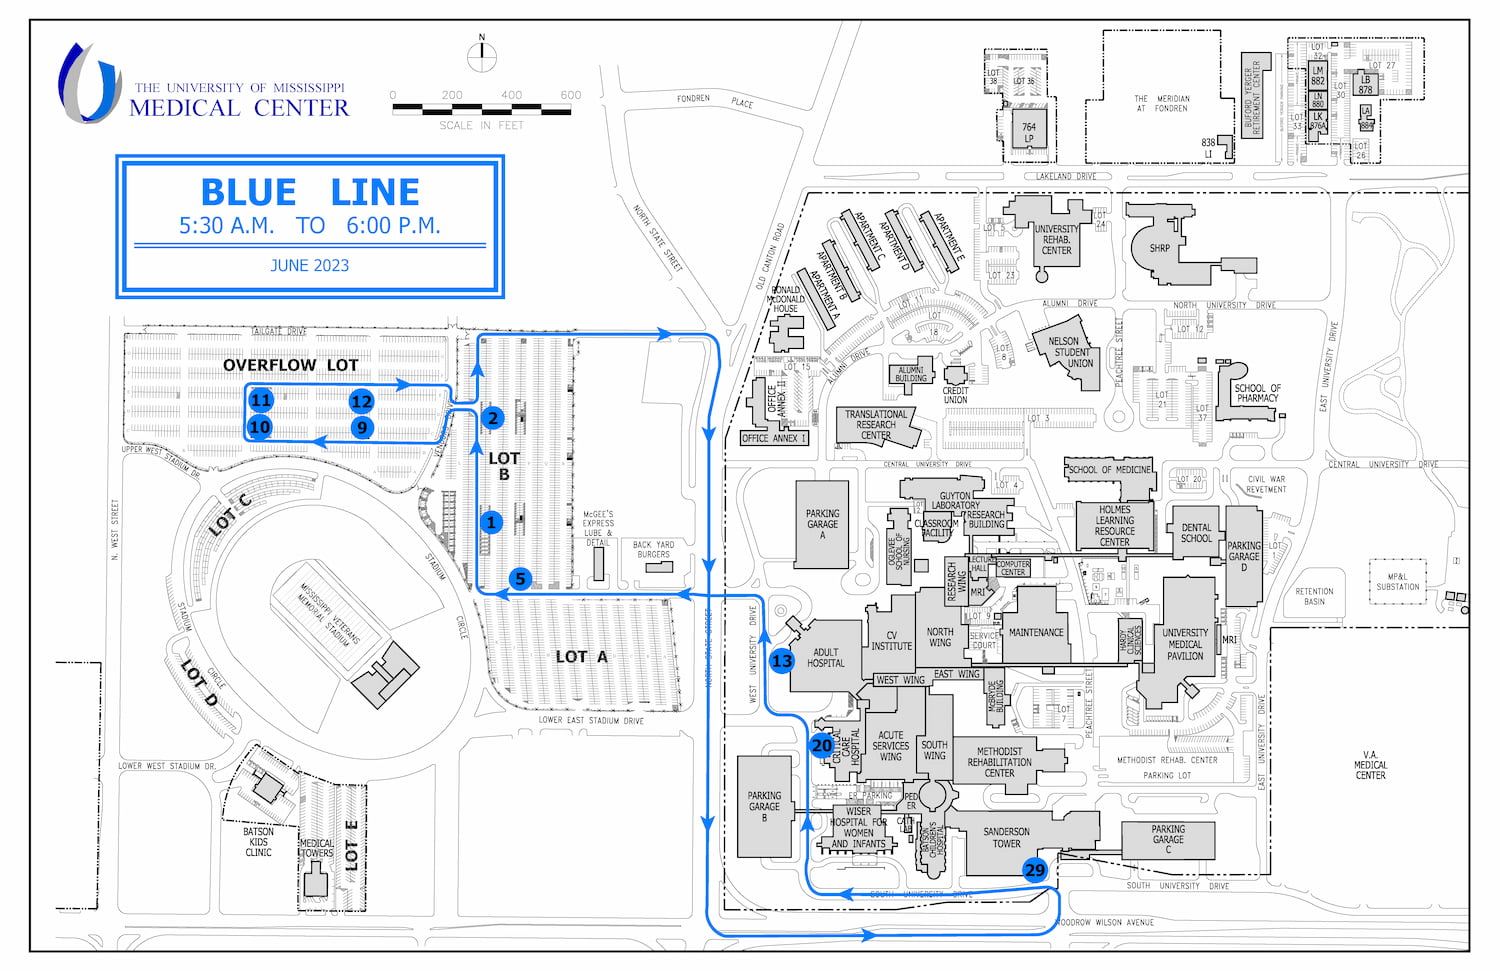 Shuttle Blue Line Map - click below for full image long description.